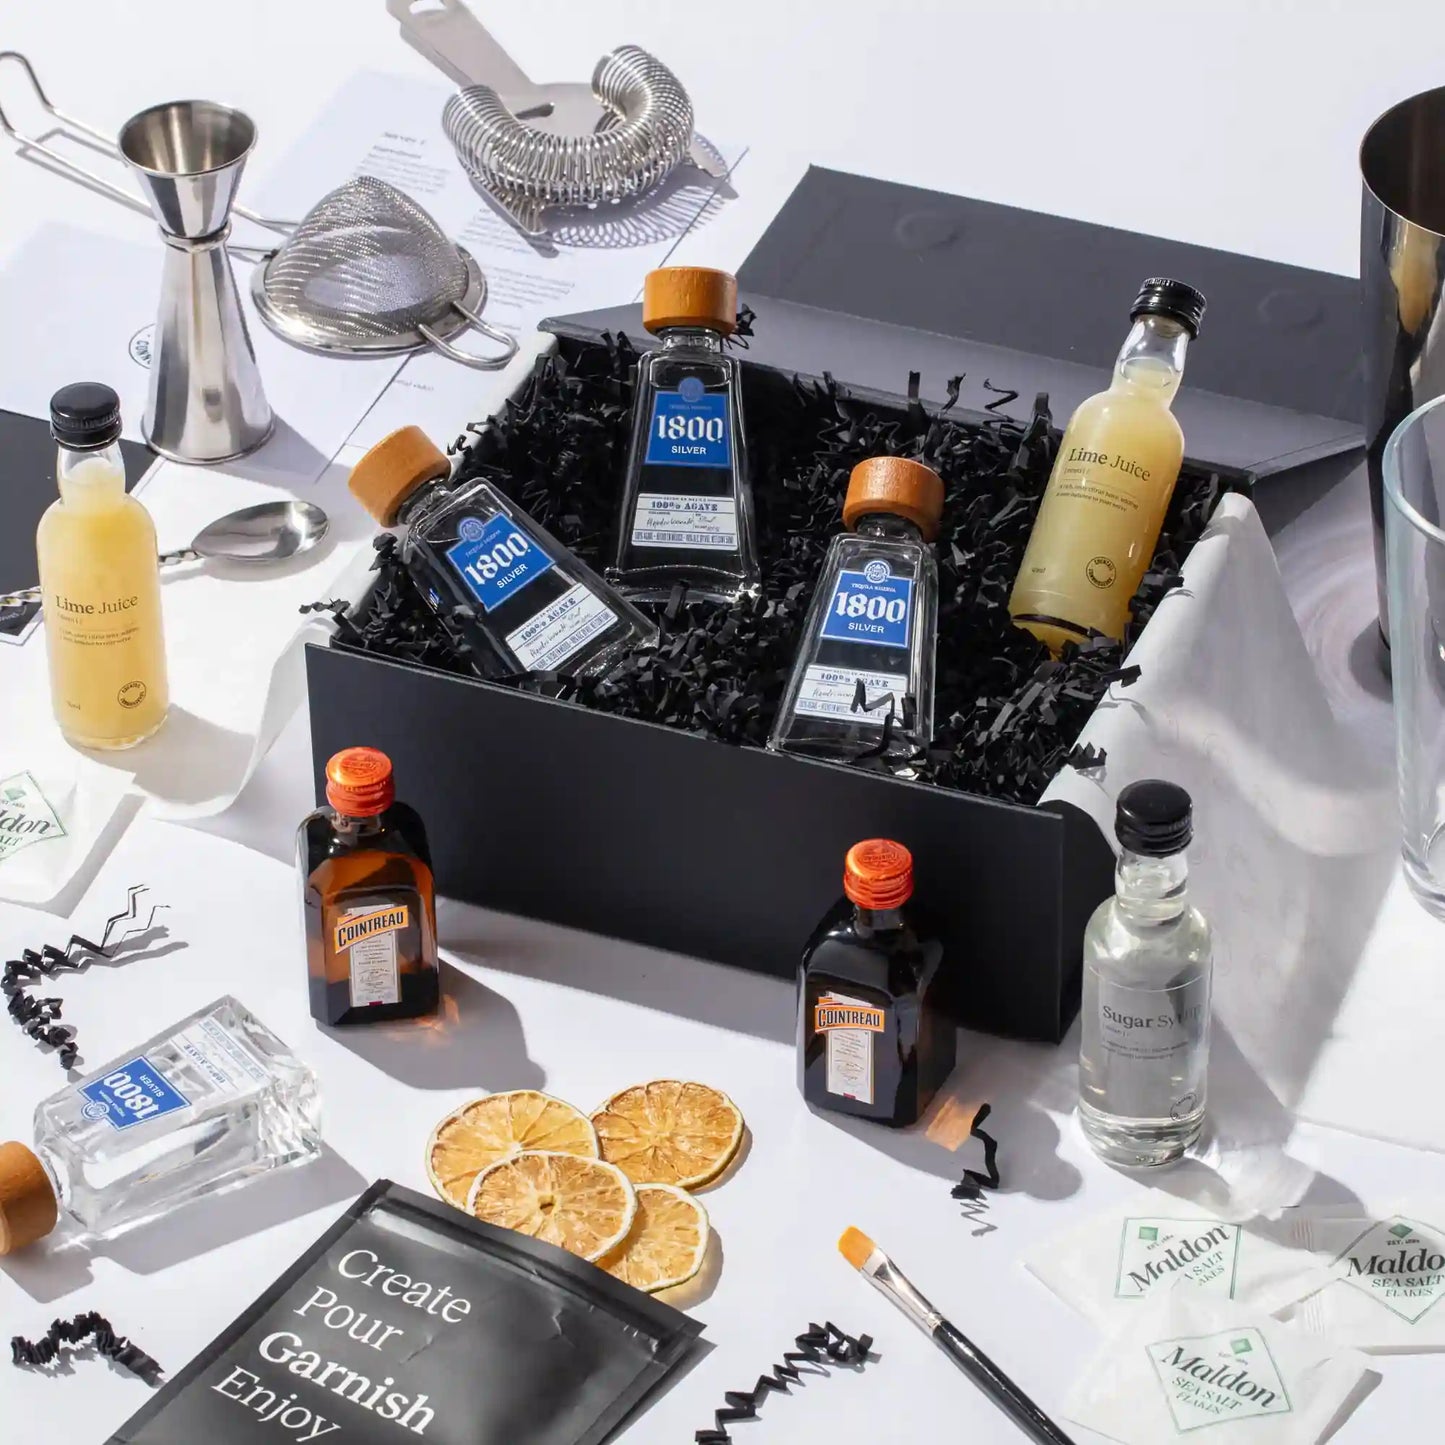 
                  
                    margarita cocktail kit with advanced bar equipment
                  
                